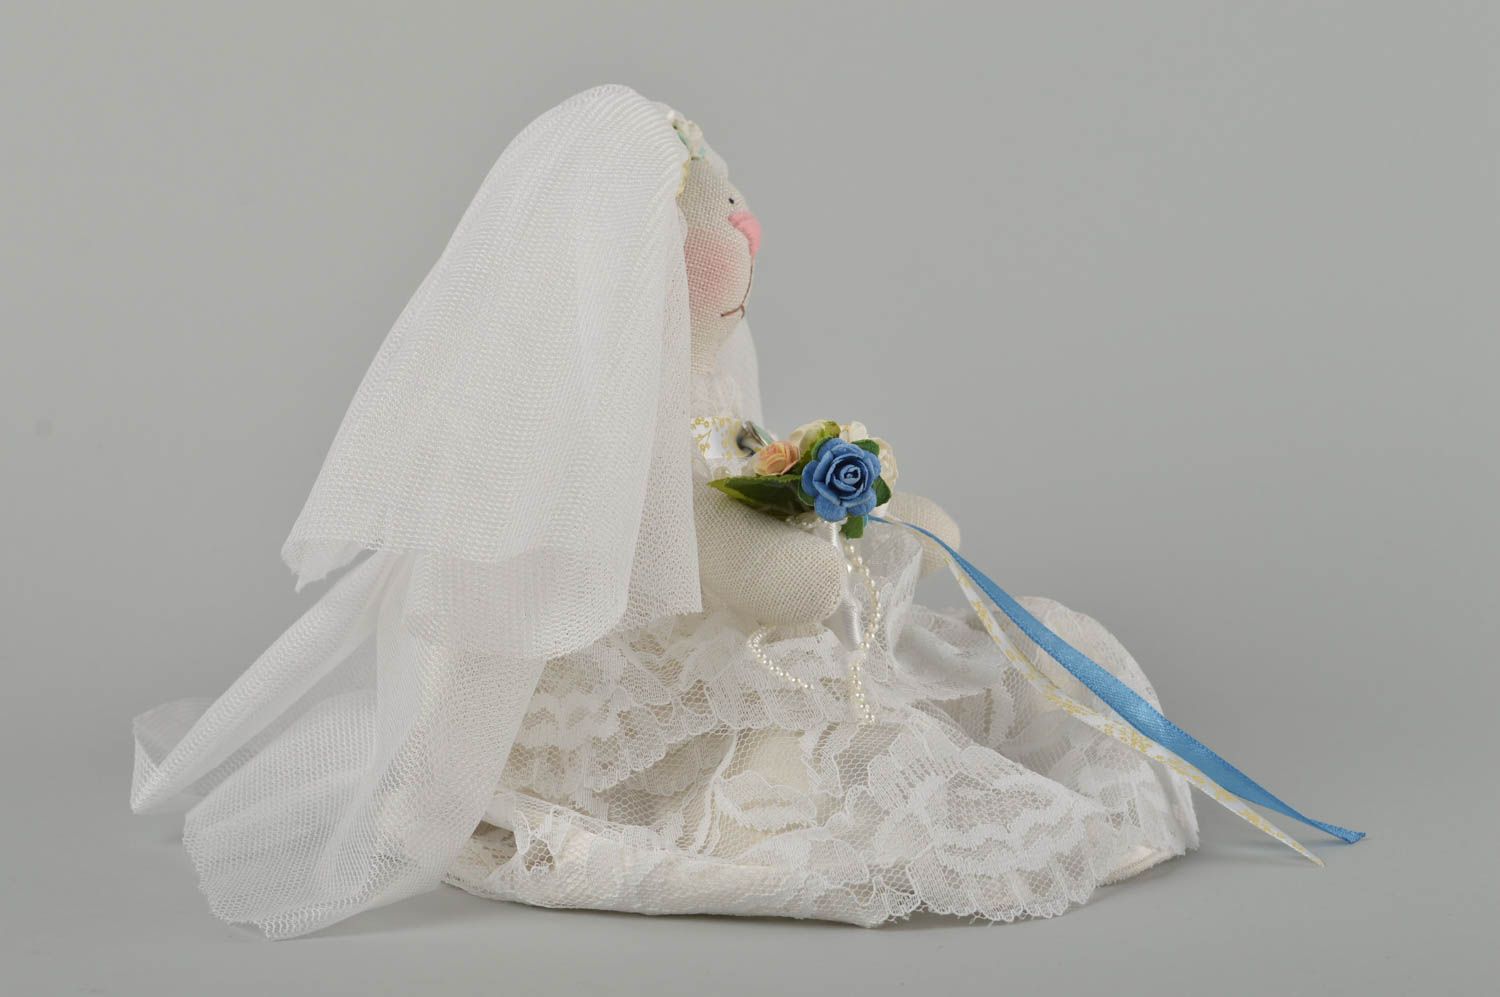 Handmade wedding rabbit unusual soft toy bride stylish wedding decor ideas photo 3